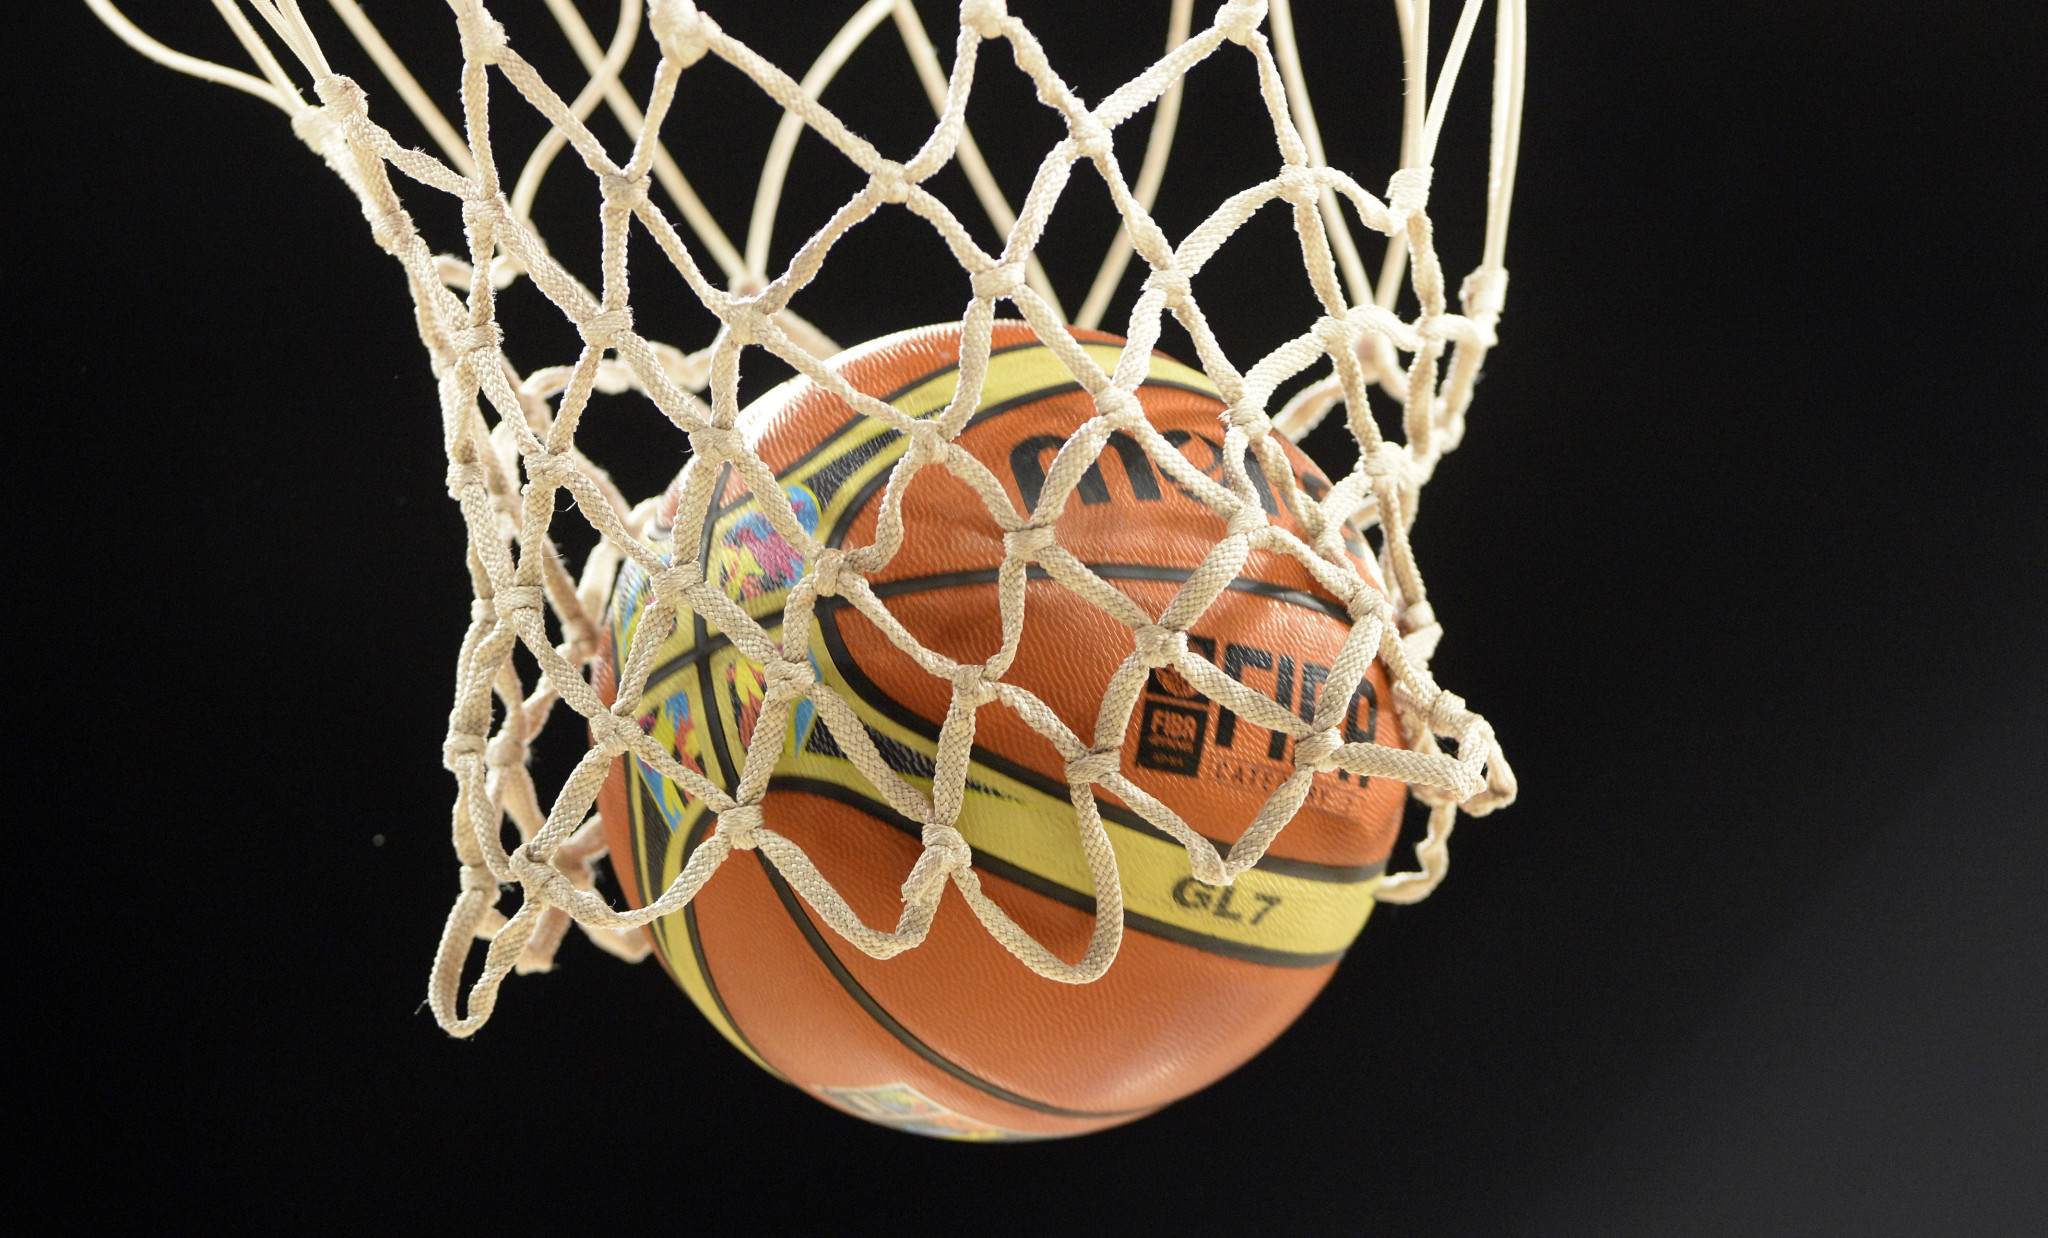 Armenia claim FIBA European Championship for Small Countries title